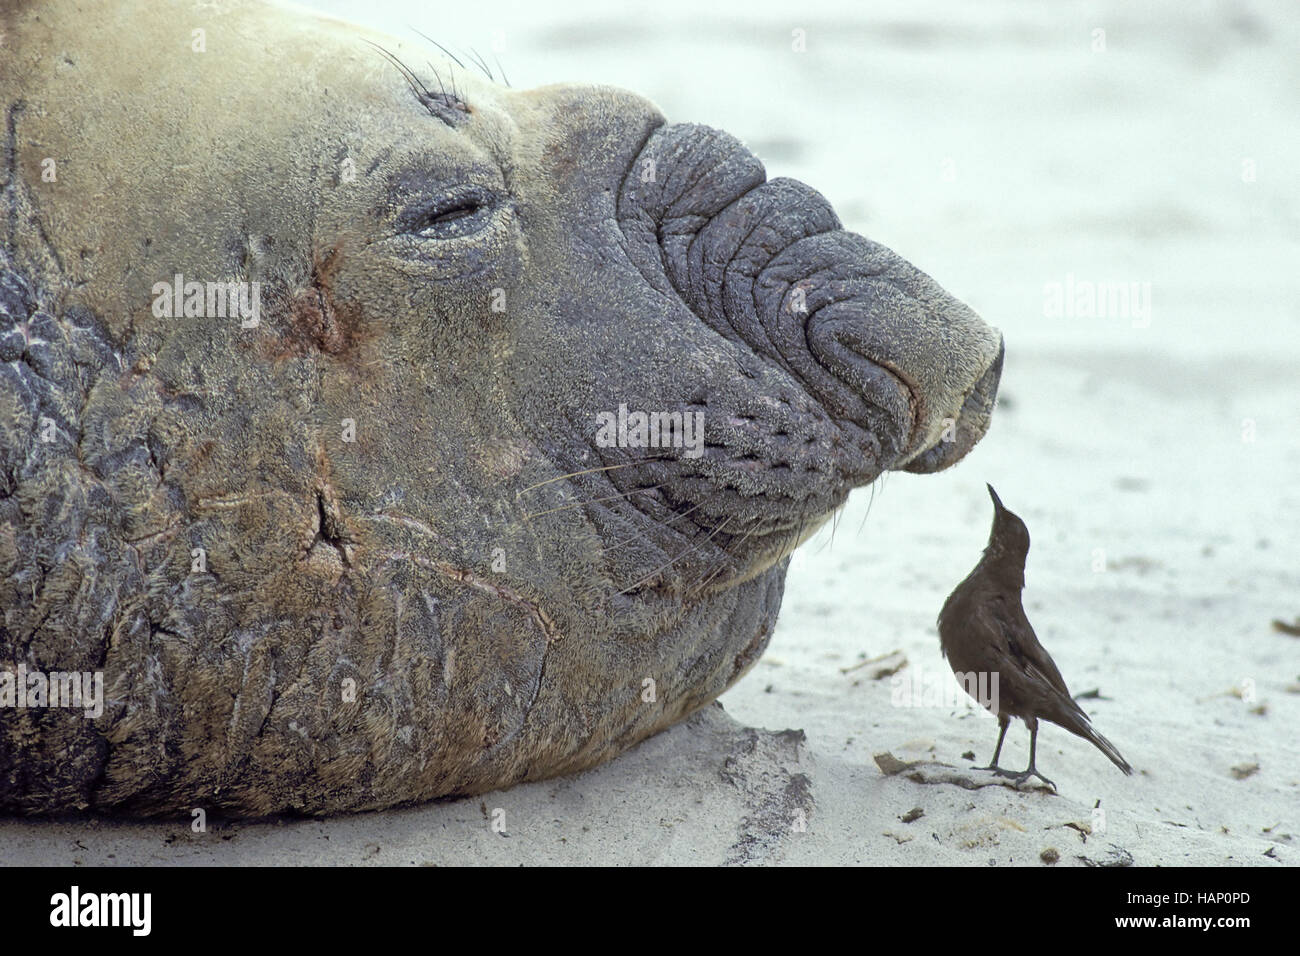 Southern elephant seal & Tussac bird, Stock Photo